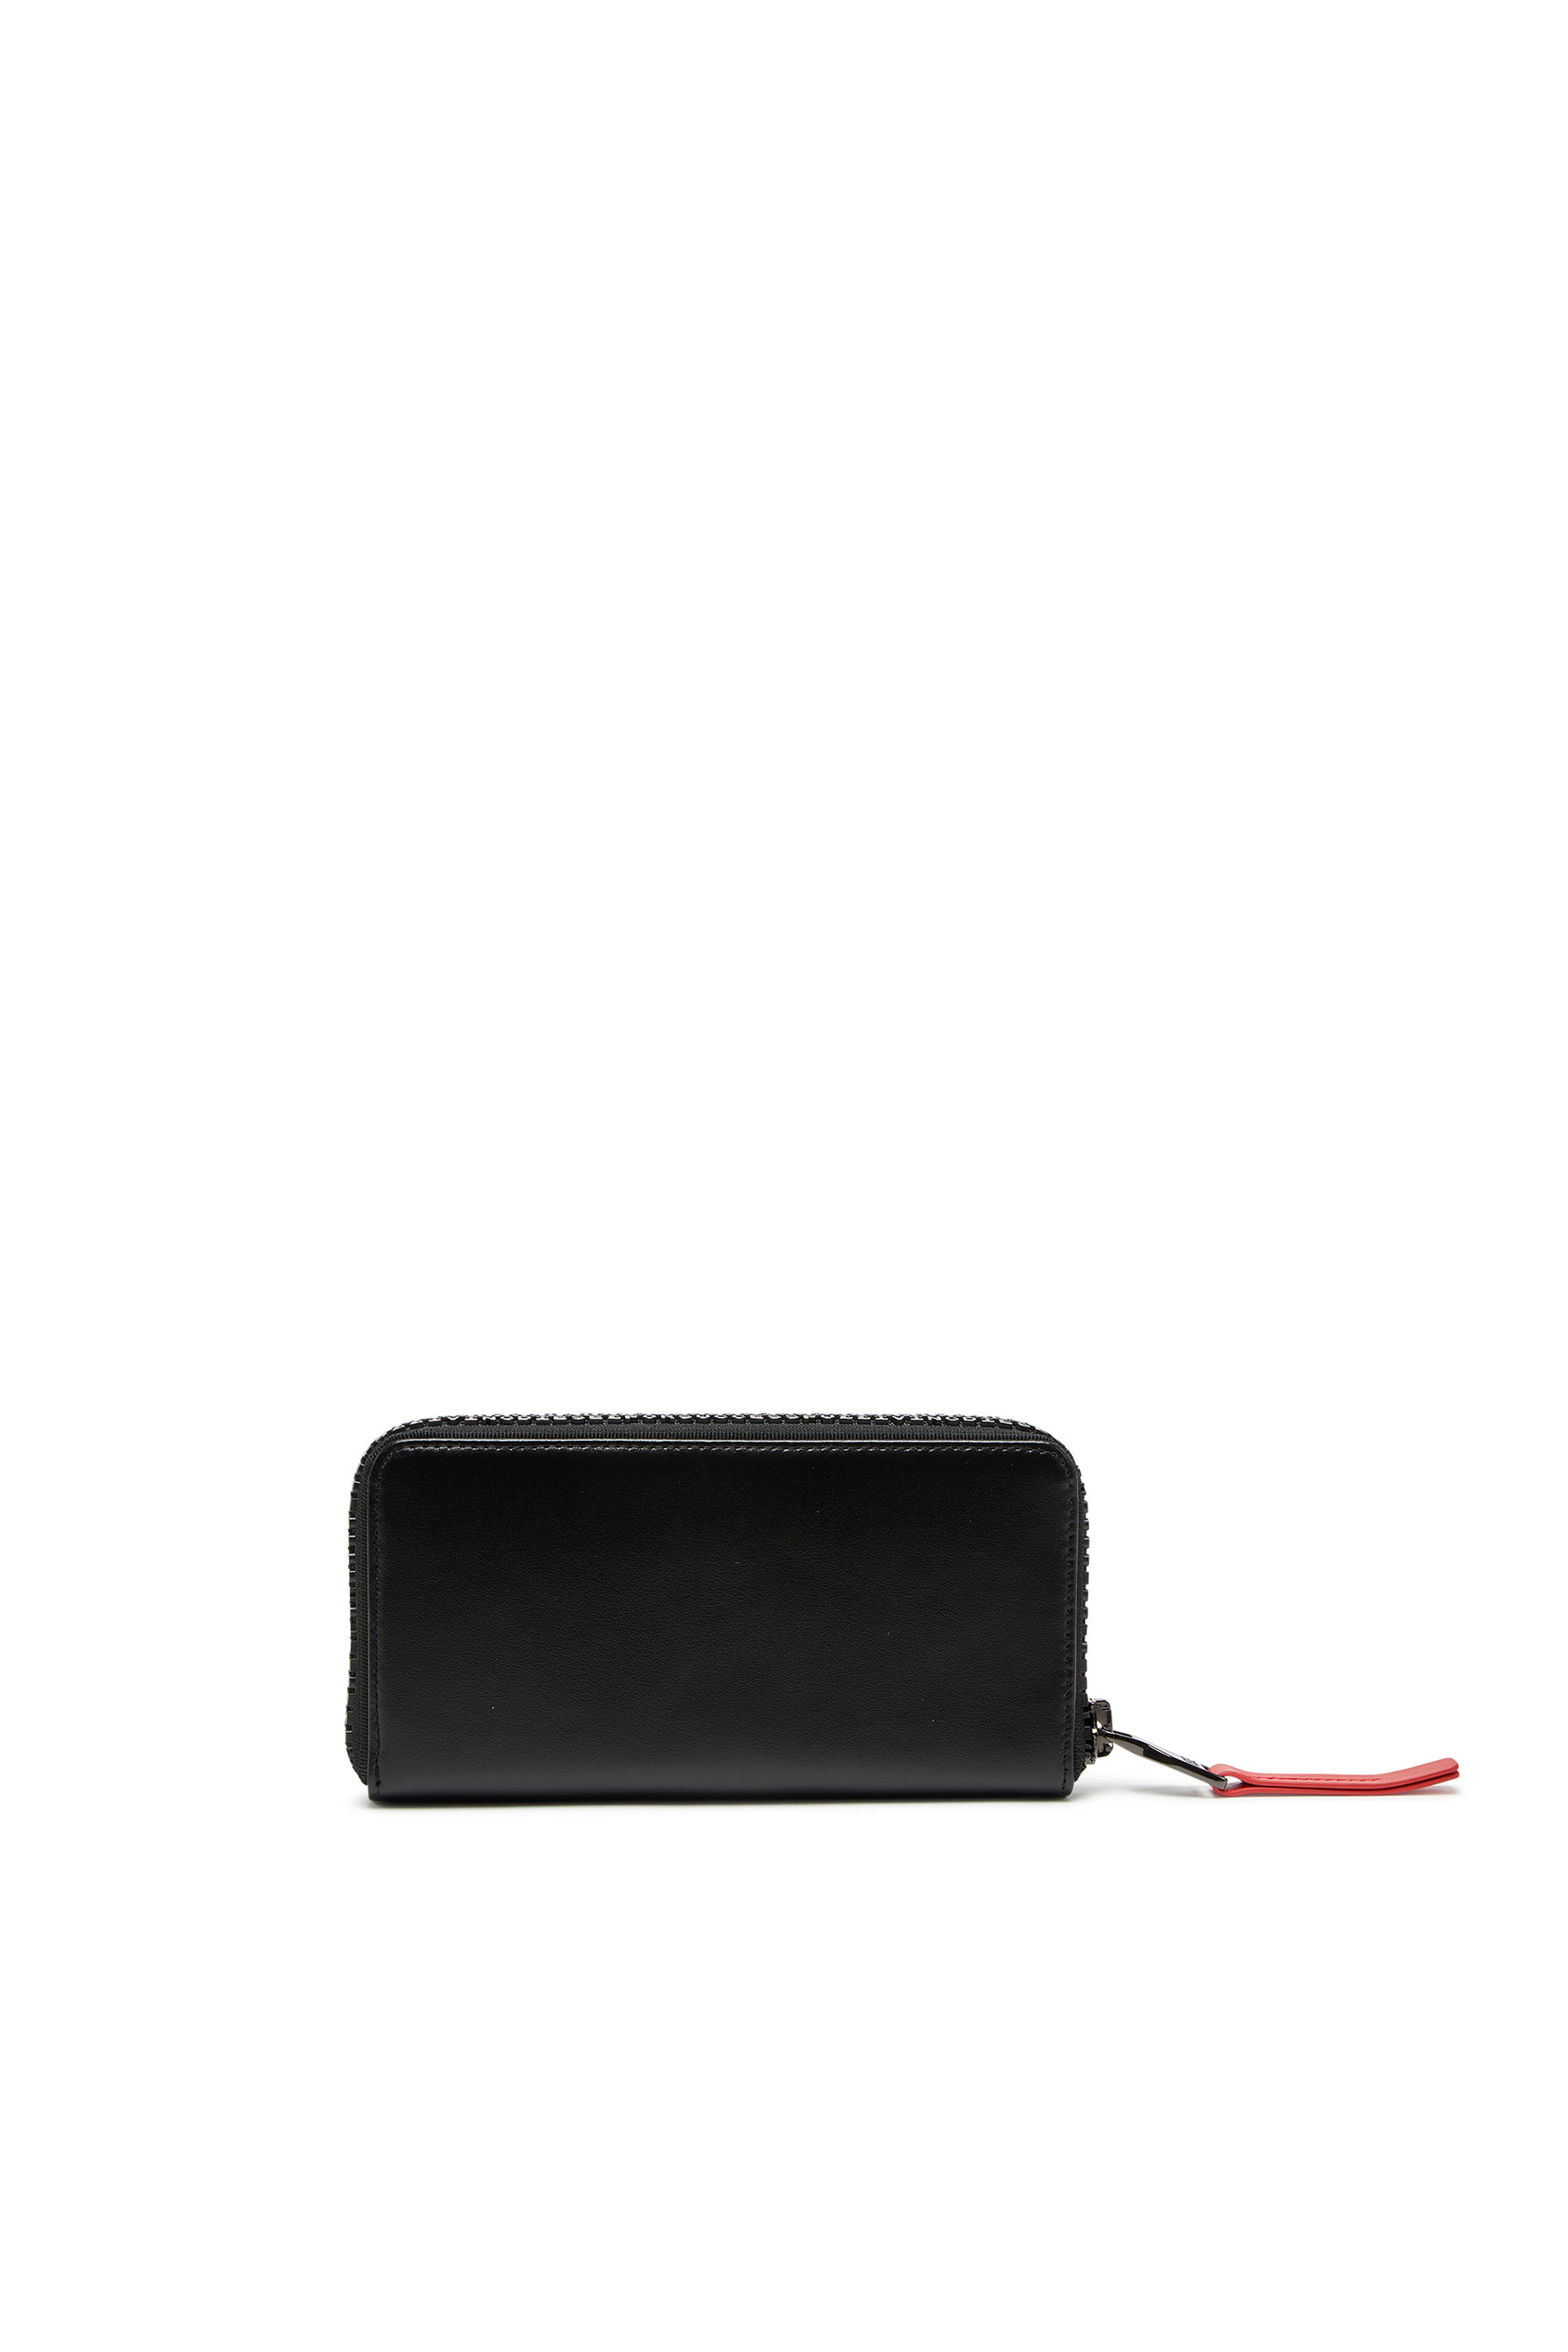 Diesel - ZIP-D CONTINETAL L, Man Long leather wallet with logo zip in Black - Image 2